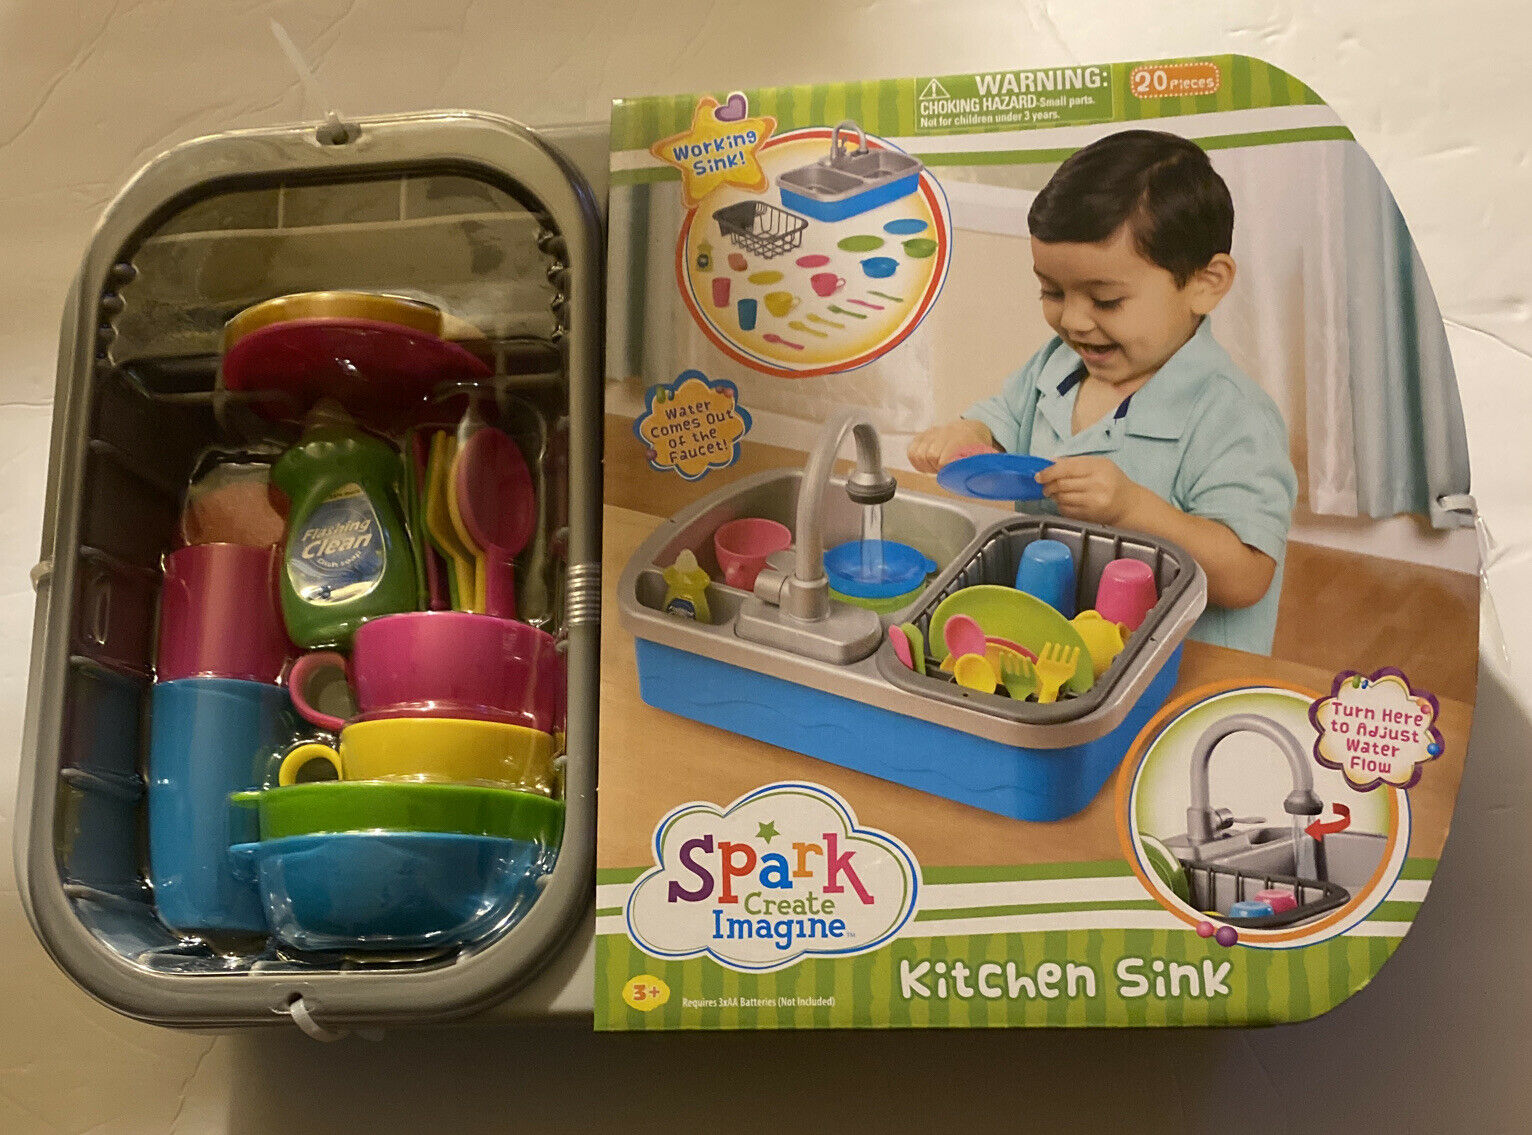 Spark Create Imagine Kitchen Sink 20 Piece Play Set NEW IN BOX!!  HOT DEAL AT WALMART!